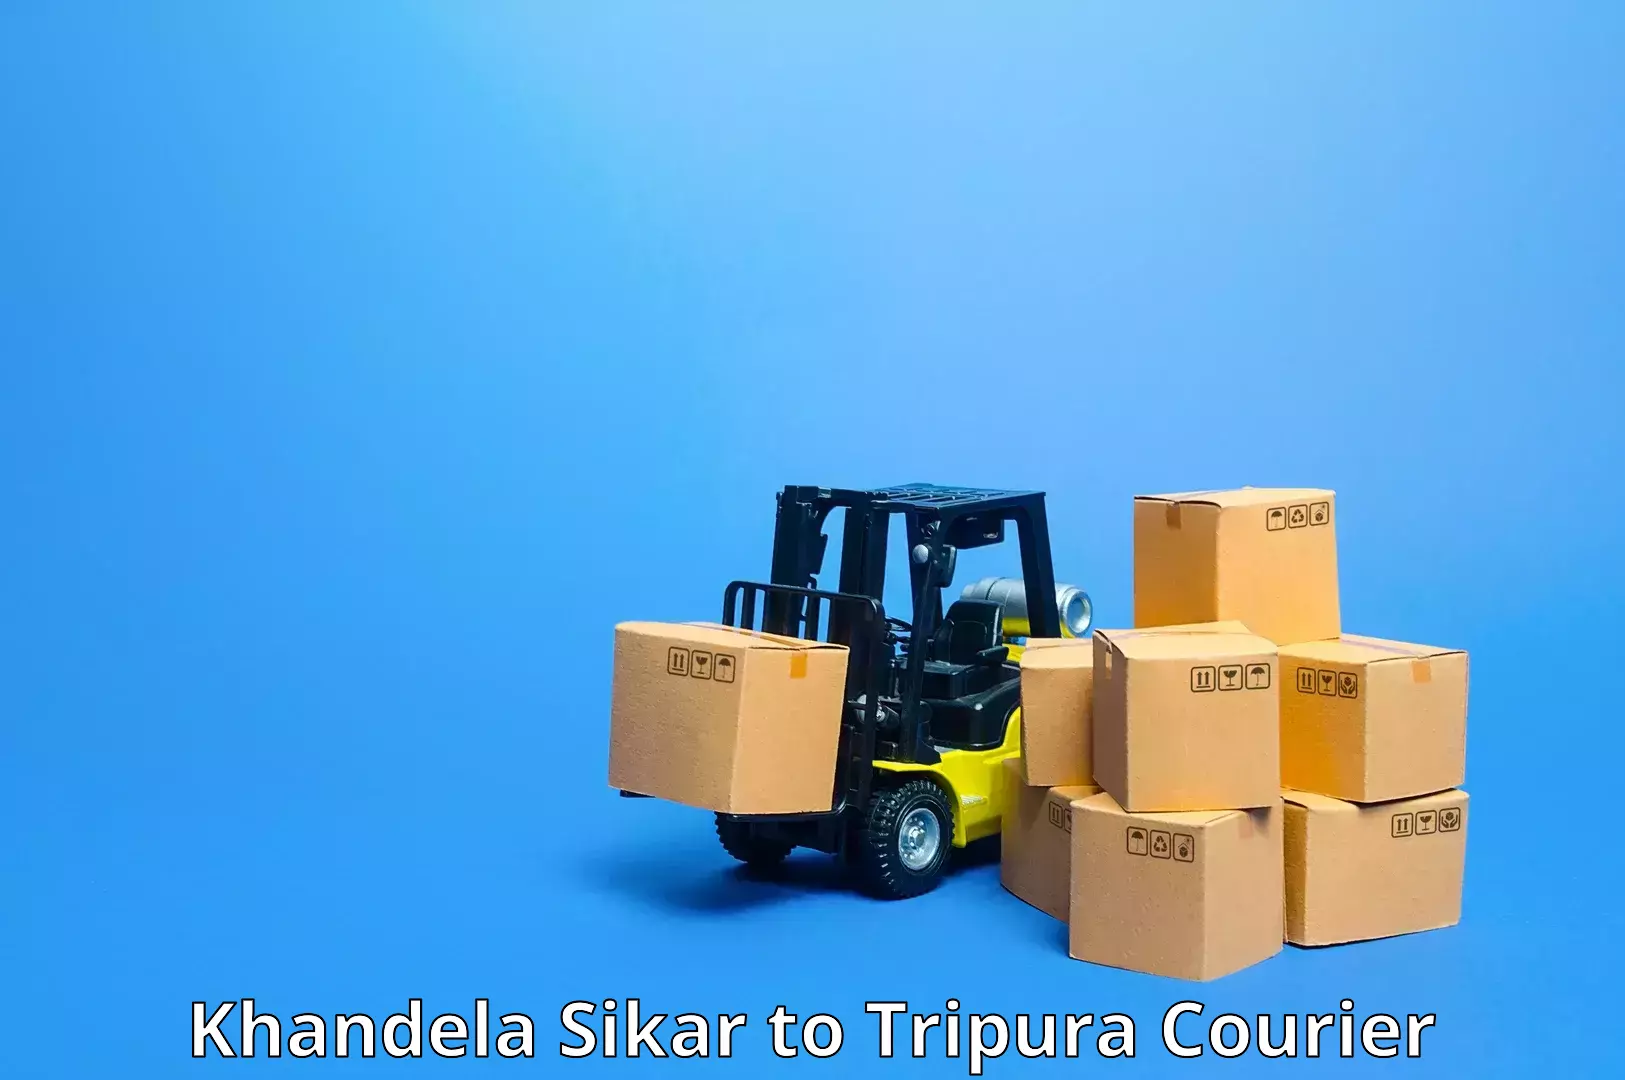 High-capacity shipping options Khandela Sikar to Tripura